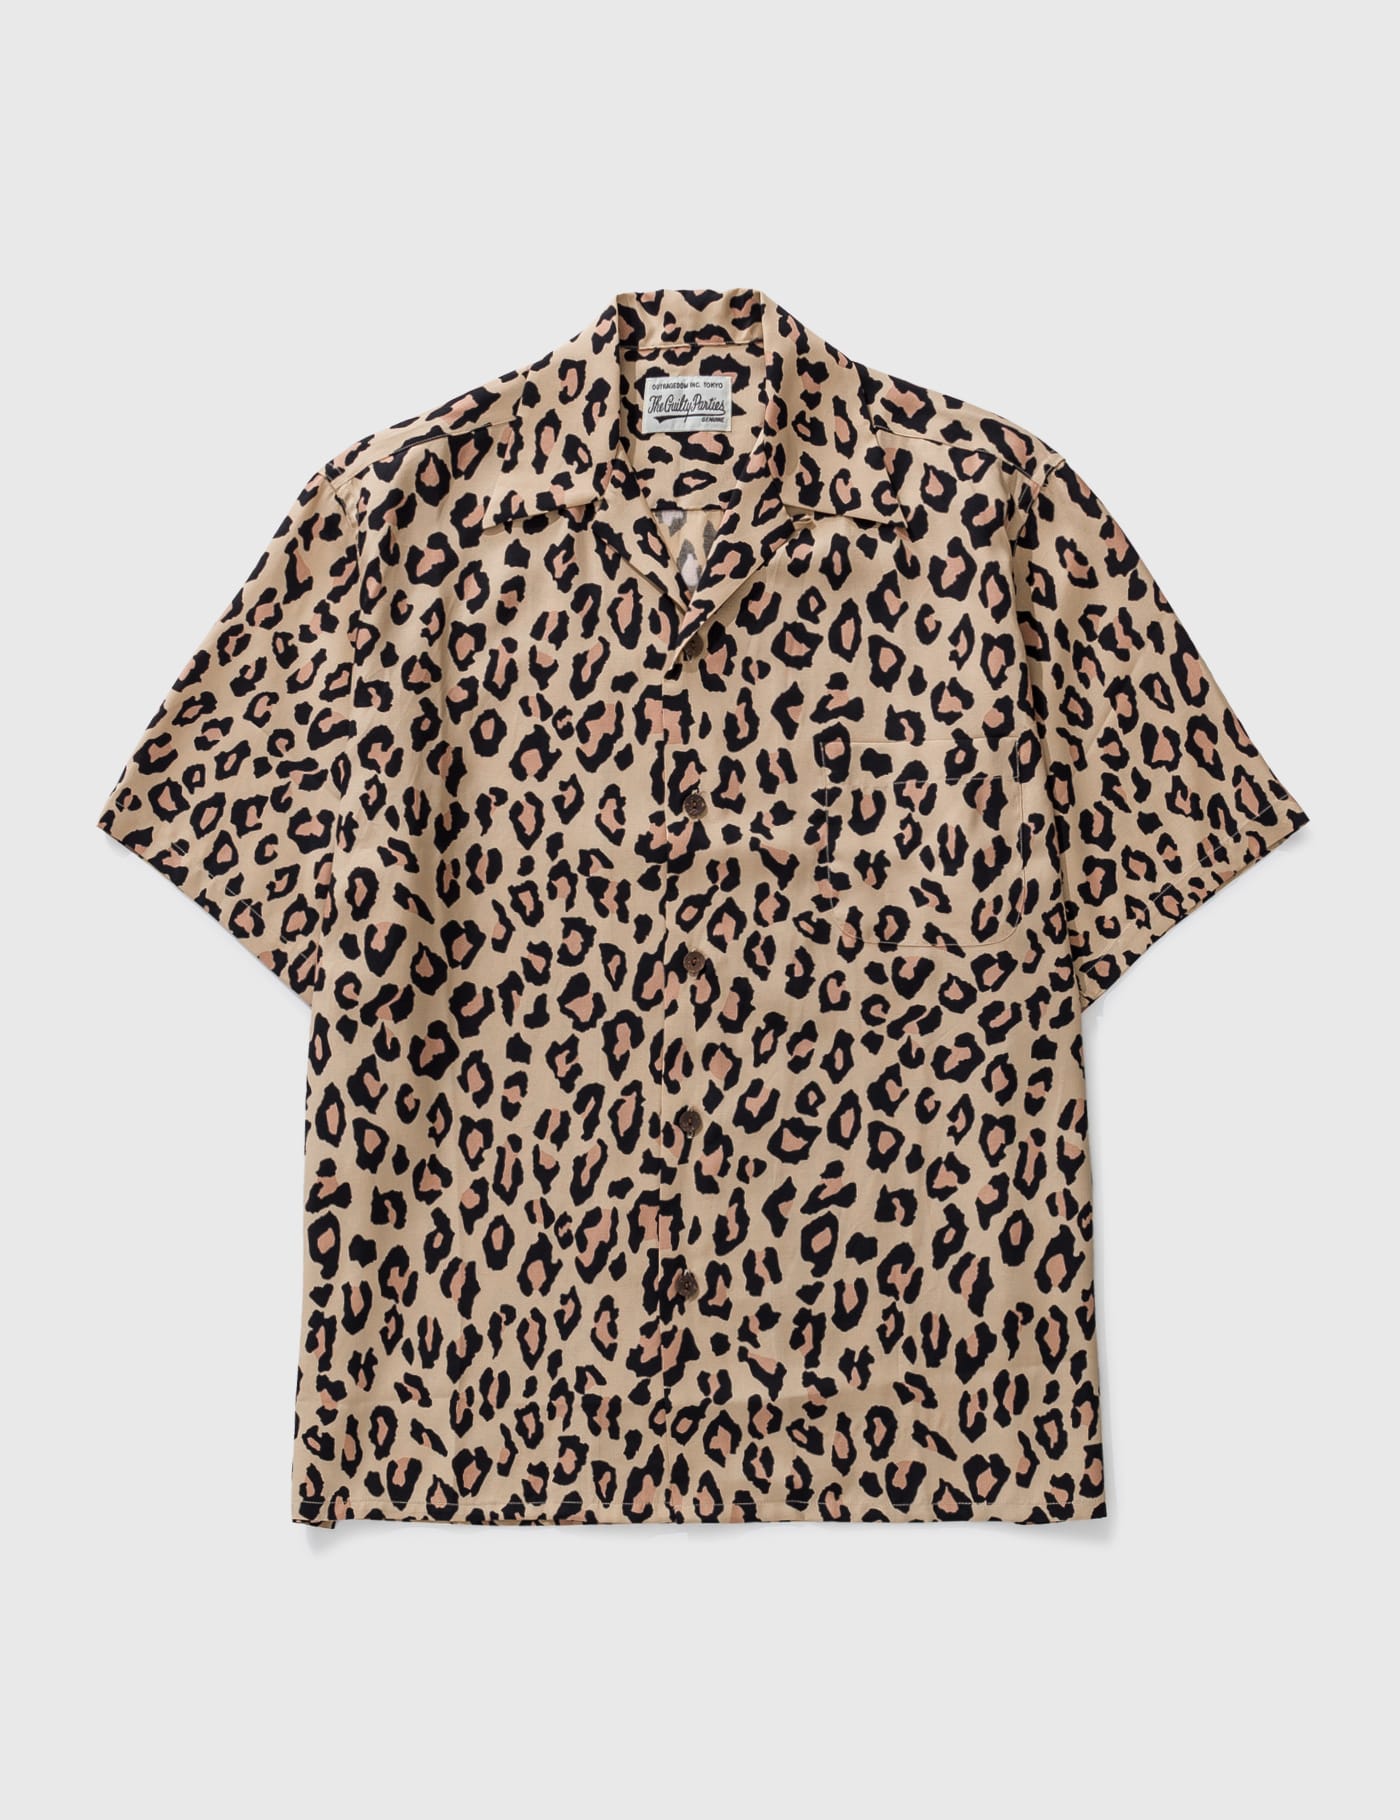 Wacko Maria - Leopard Open Collar Shirt | HBX - HYPEBEAST 为您搜罗全球潮流时尚品牌